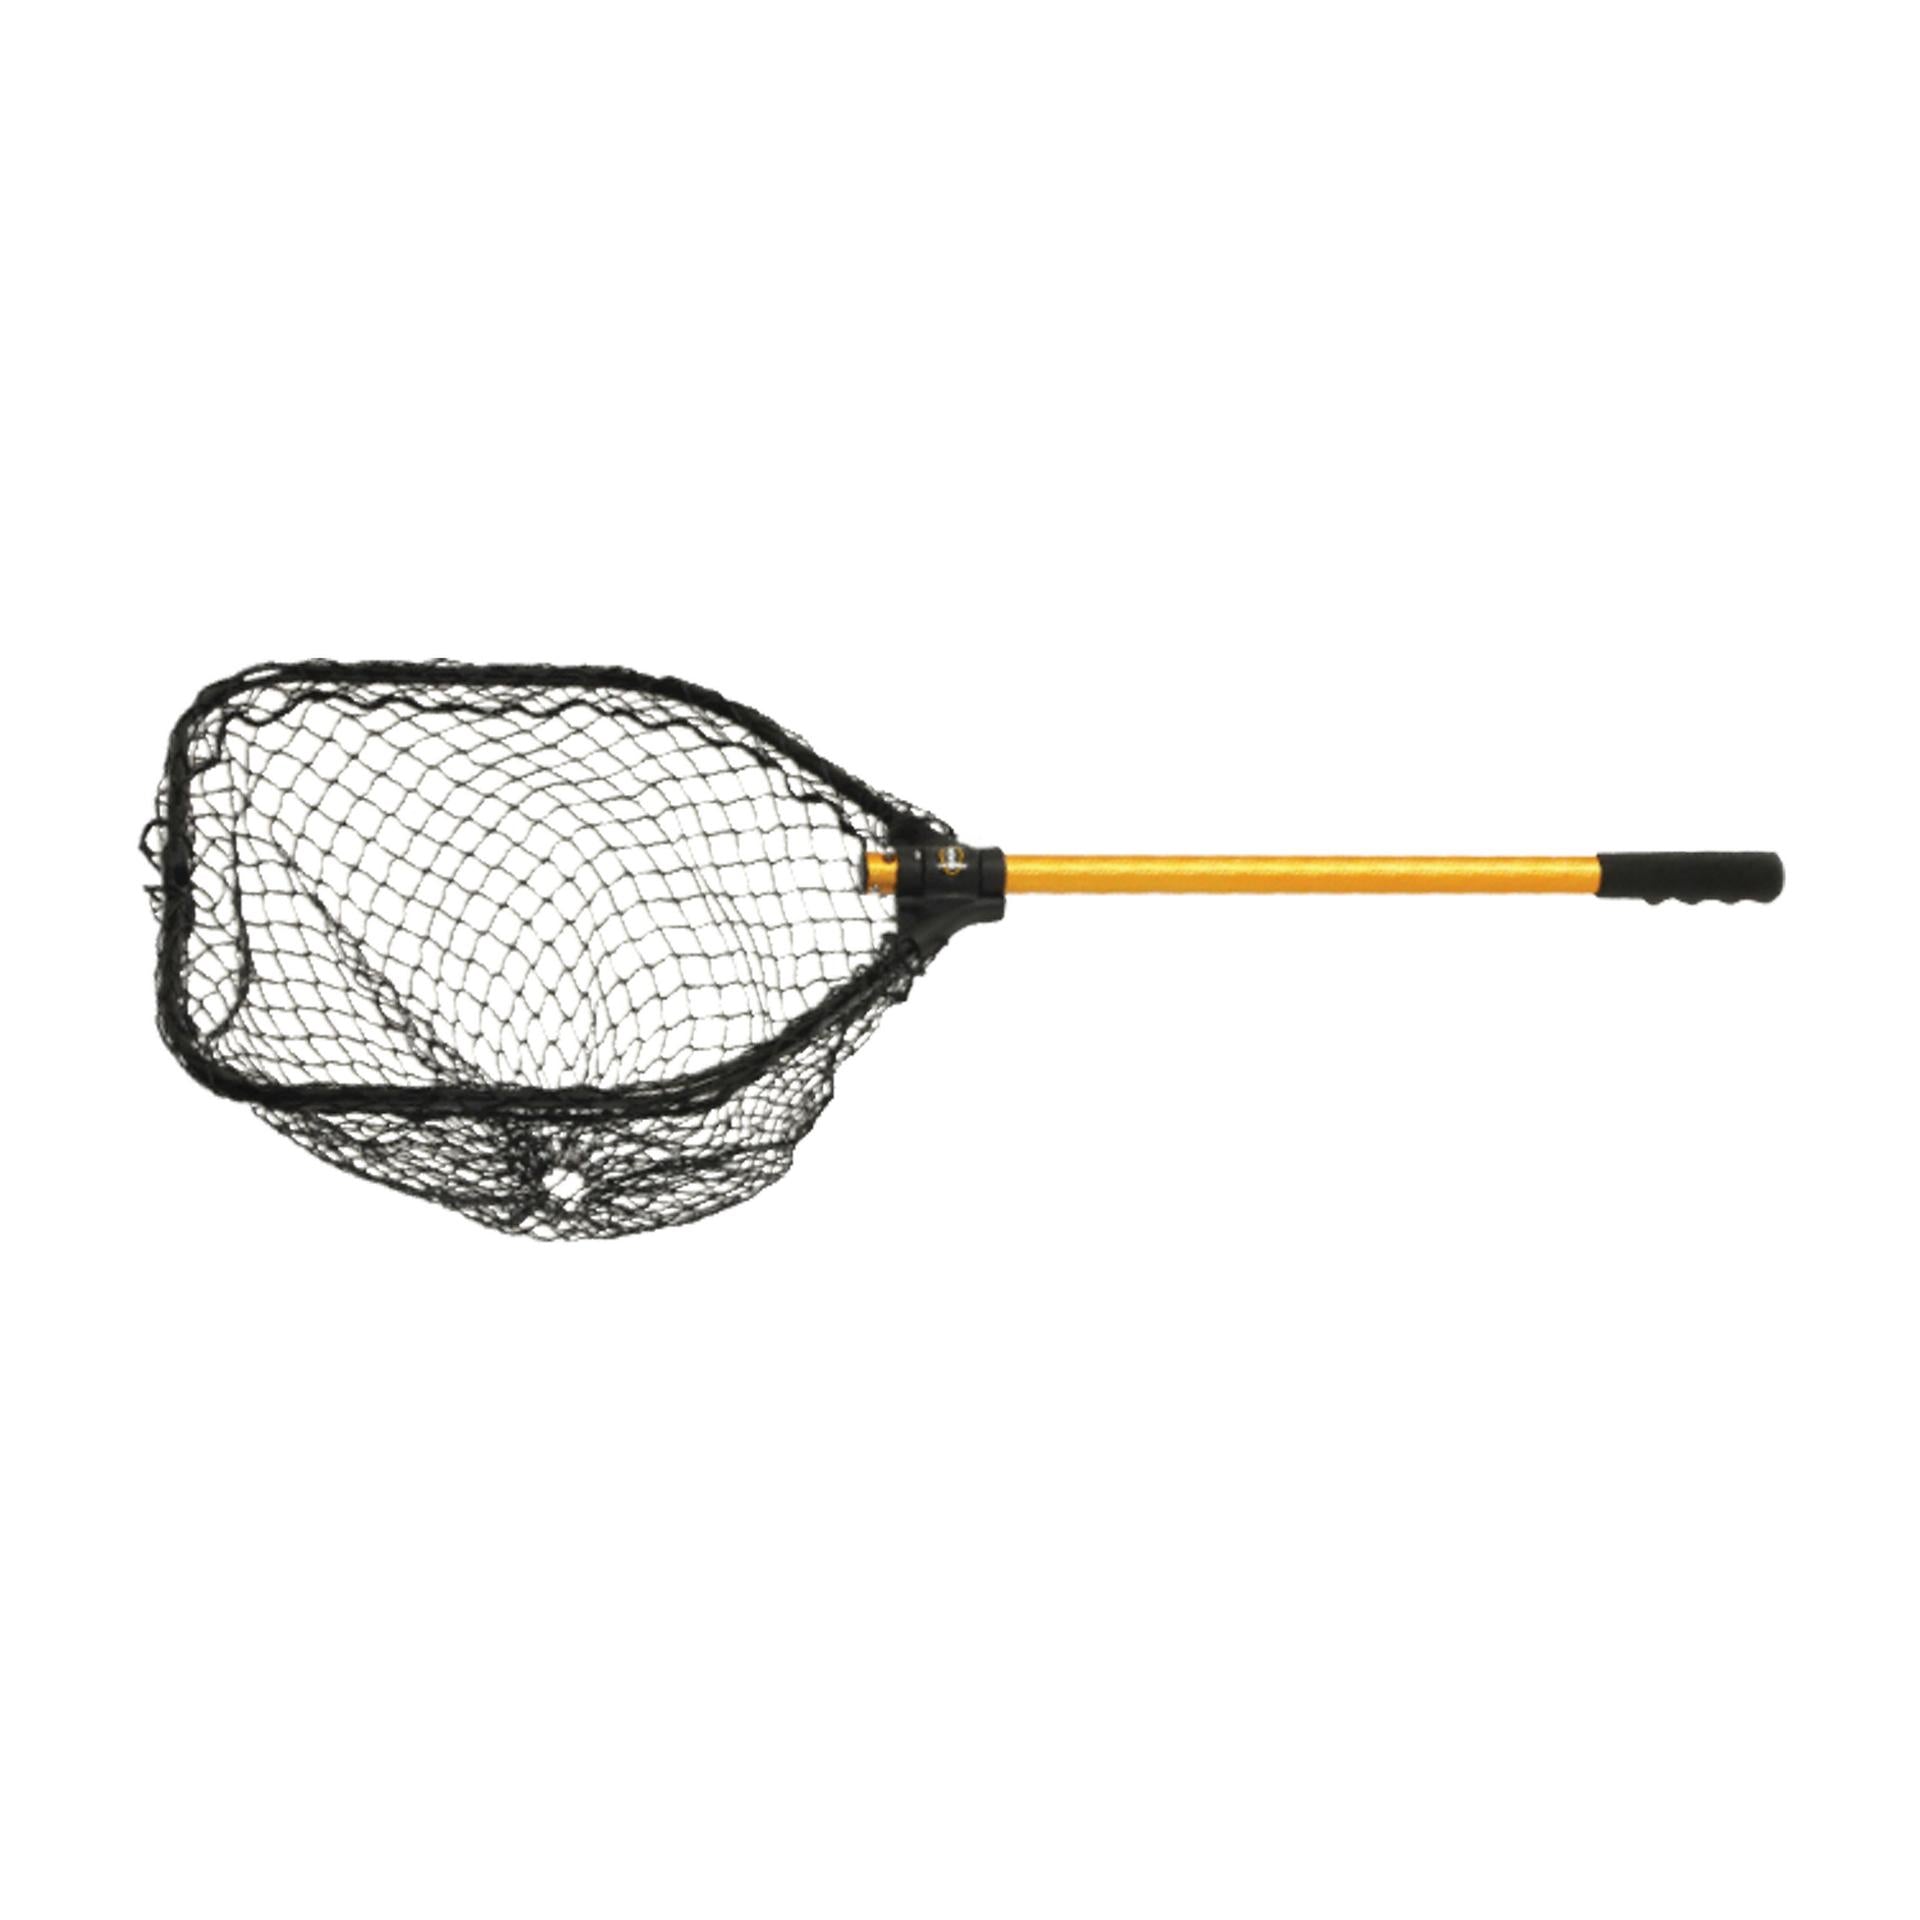 Portable Fishing Net - Versatile & Durable - Easy Transportation